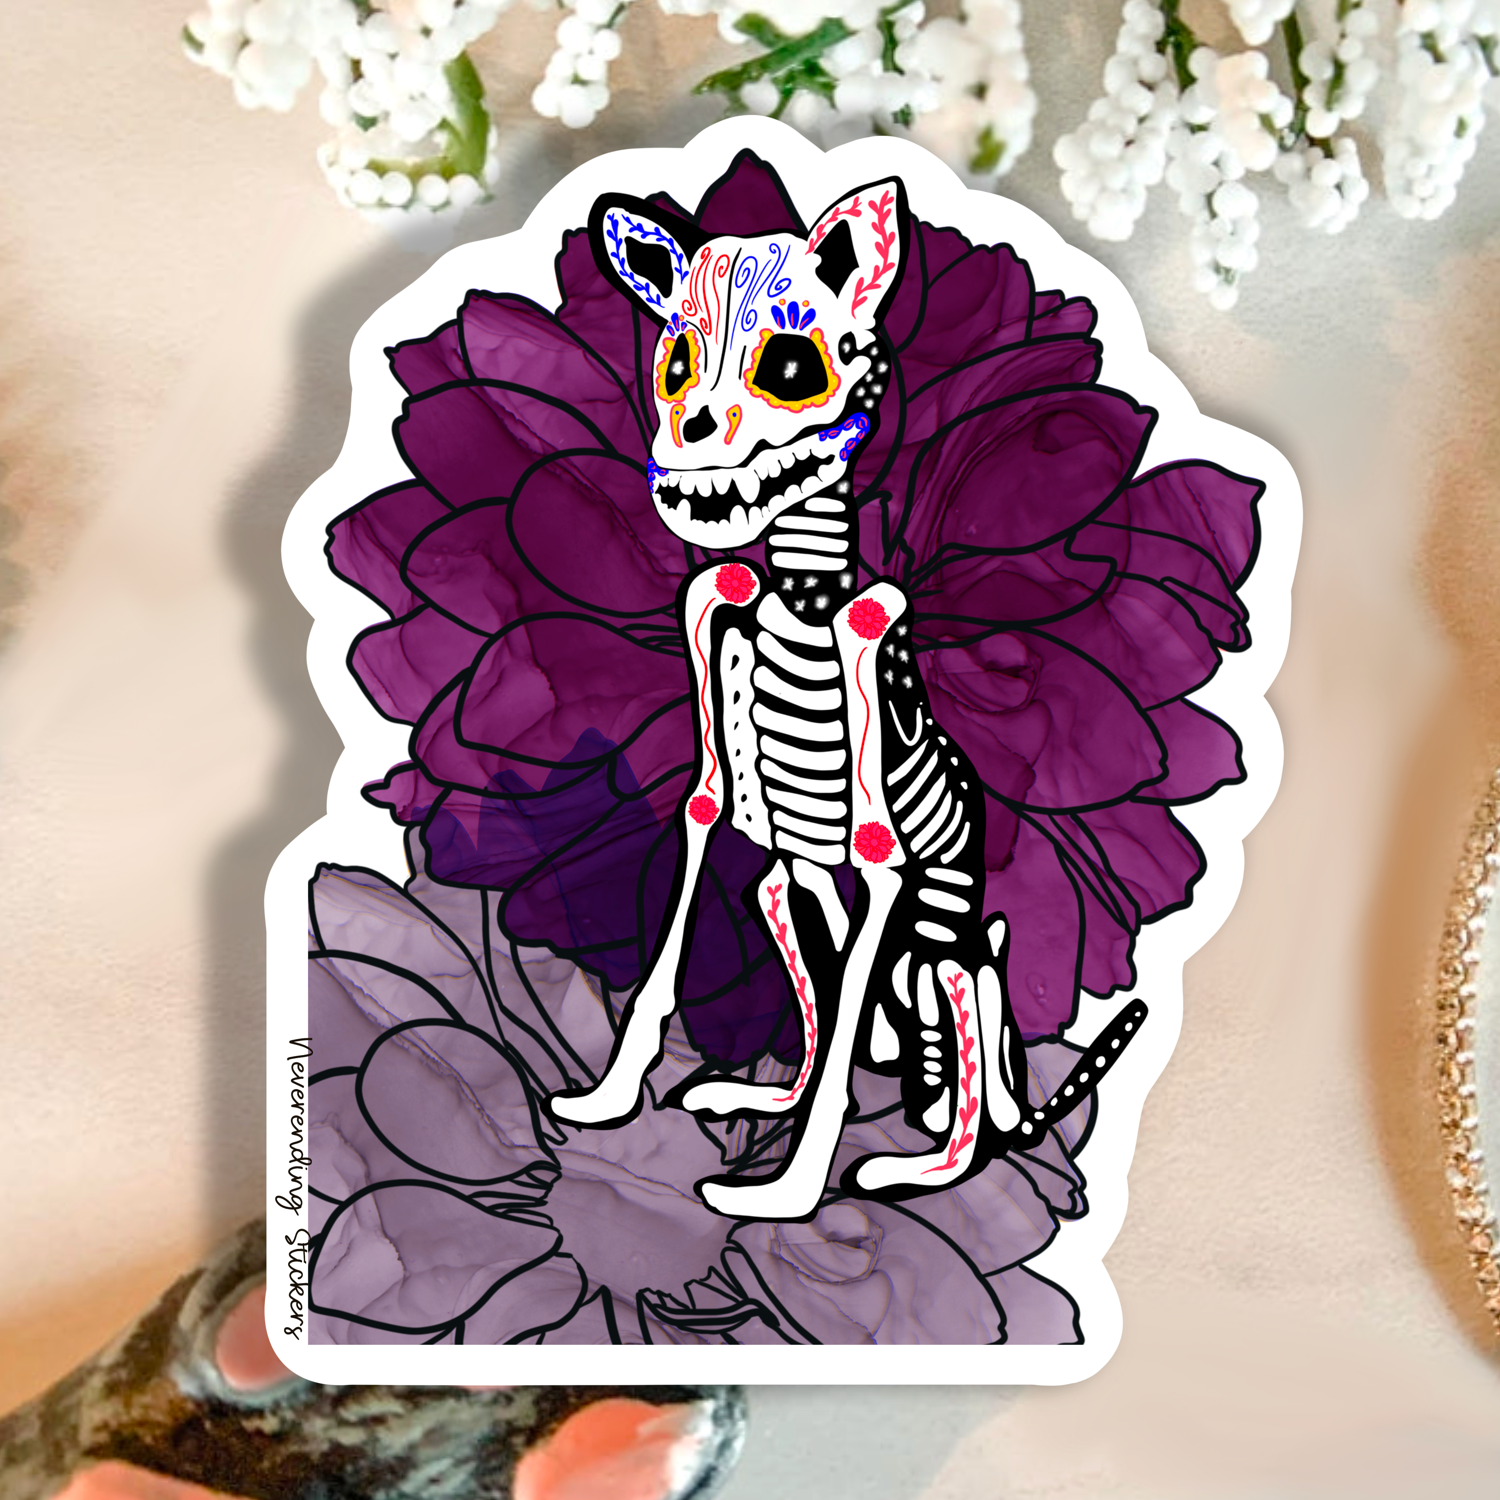 Neverending Stickers - Day Of Dead Floral Dog - 3.25x3in - Vinyl Sticker Or Magnet - Dia De Los Muertos